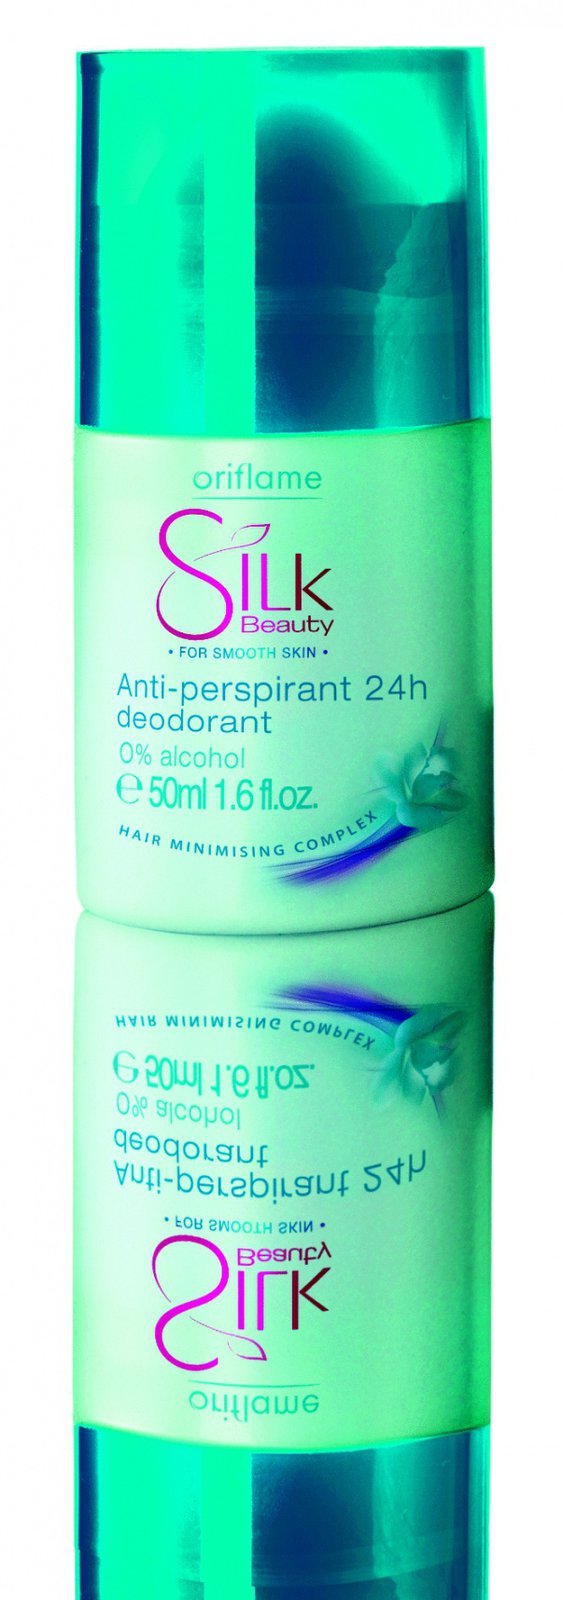 Kuličkový antiperspirant a deodorant Oriflame, 24h Silk Beauty, 99,- Kč